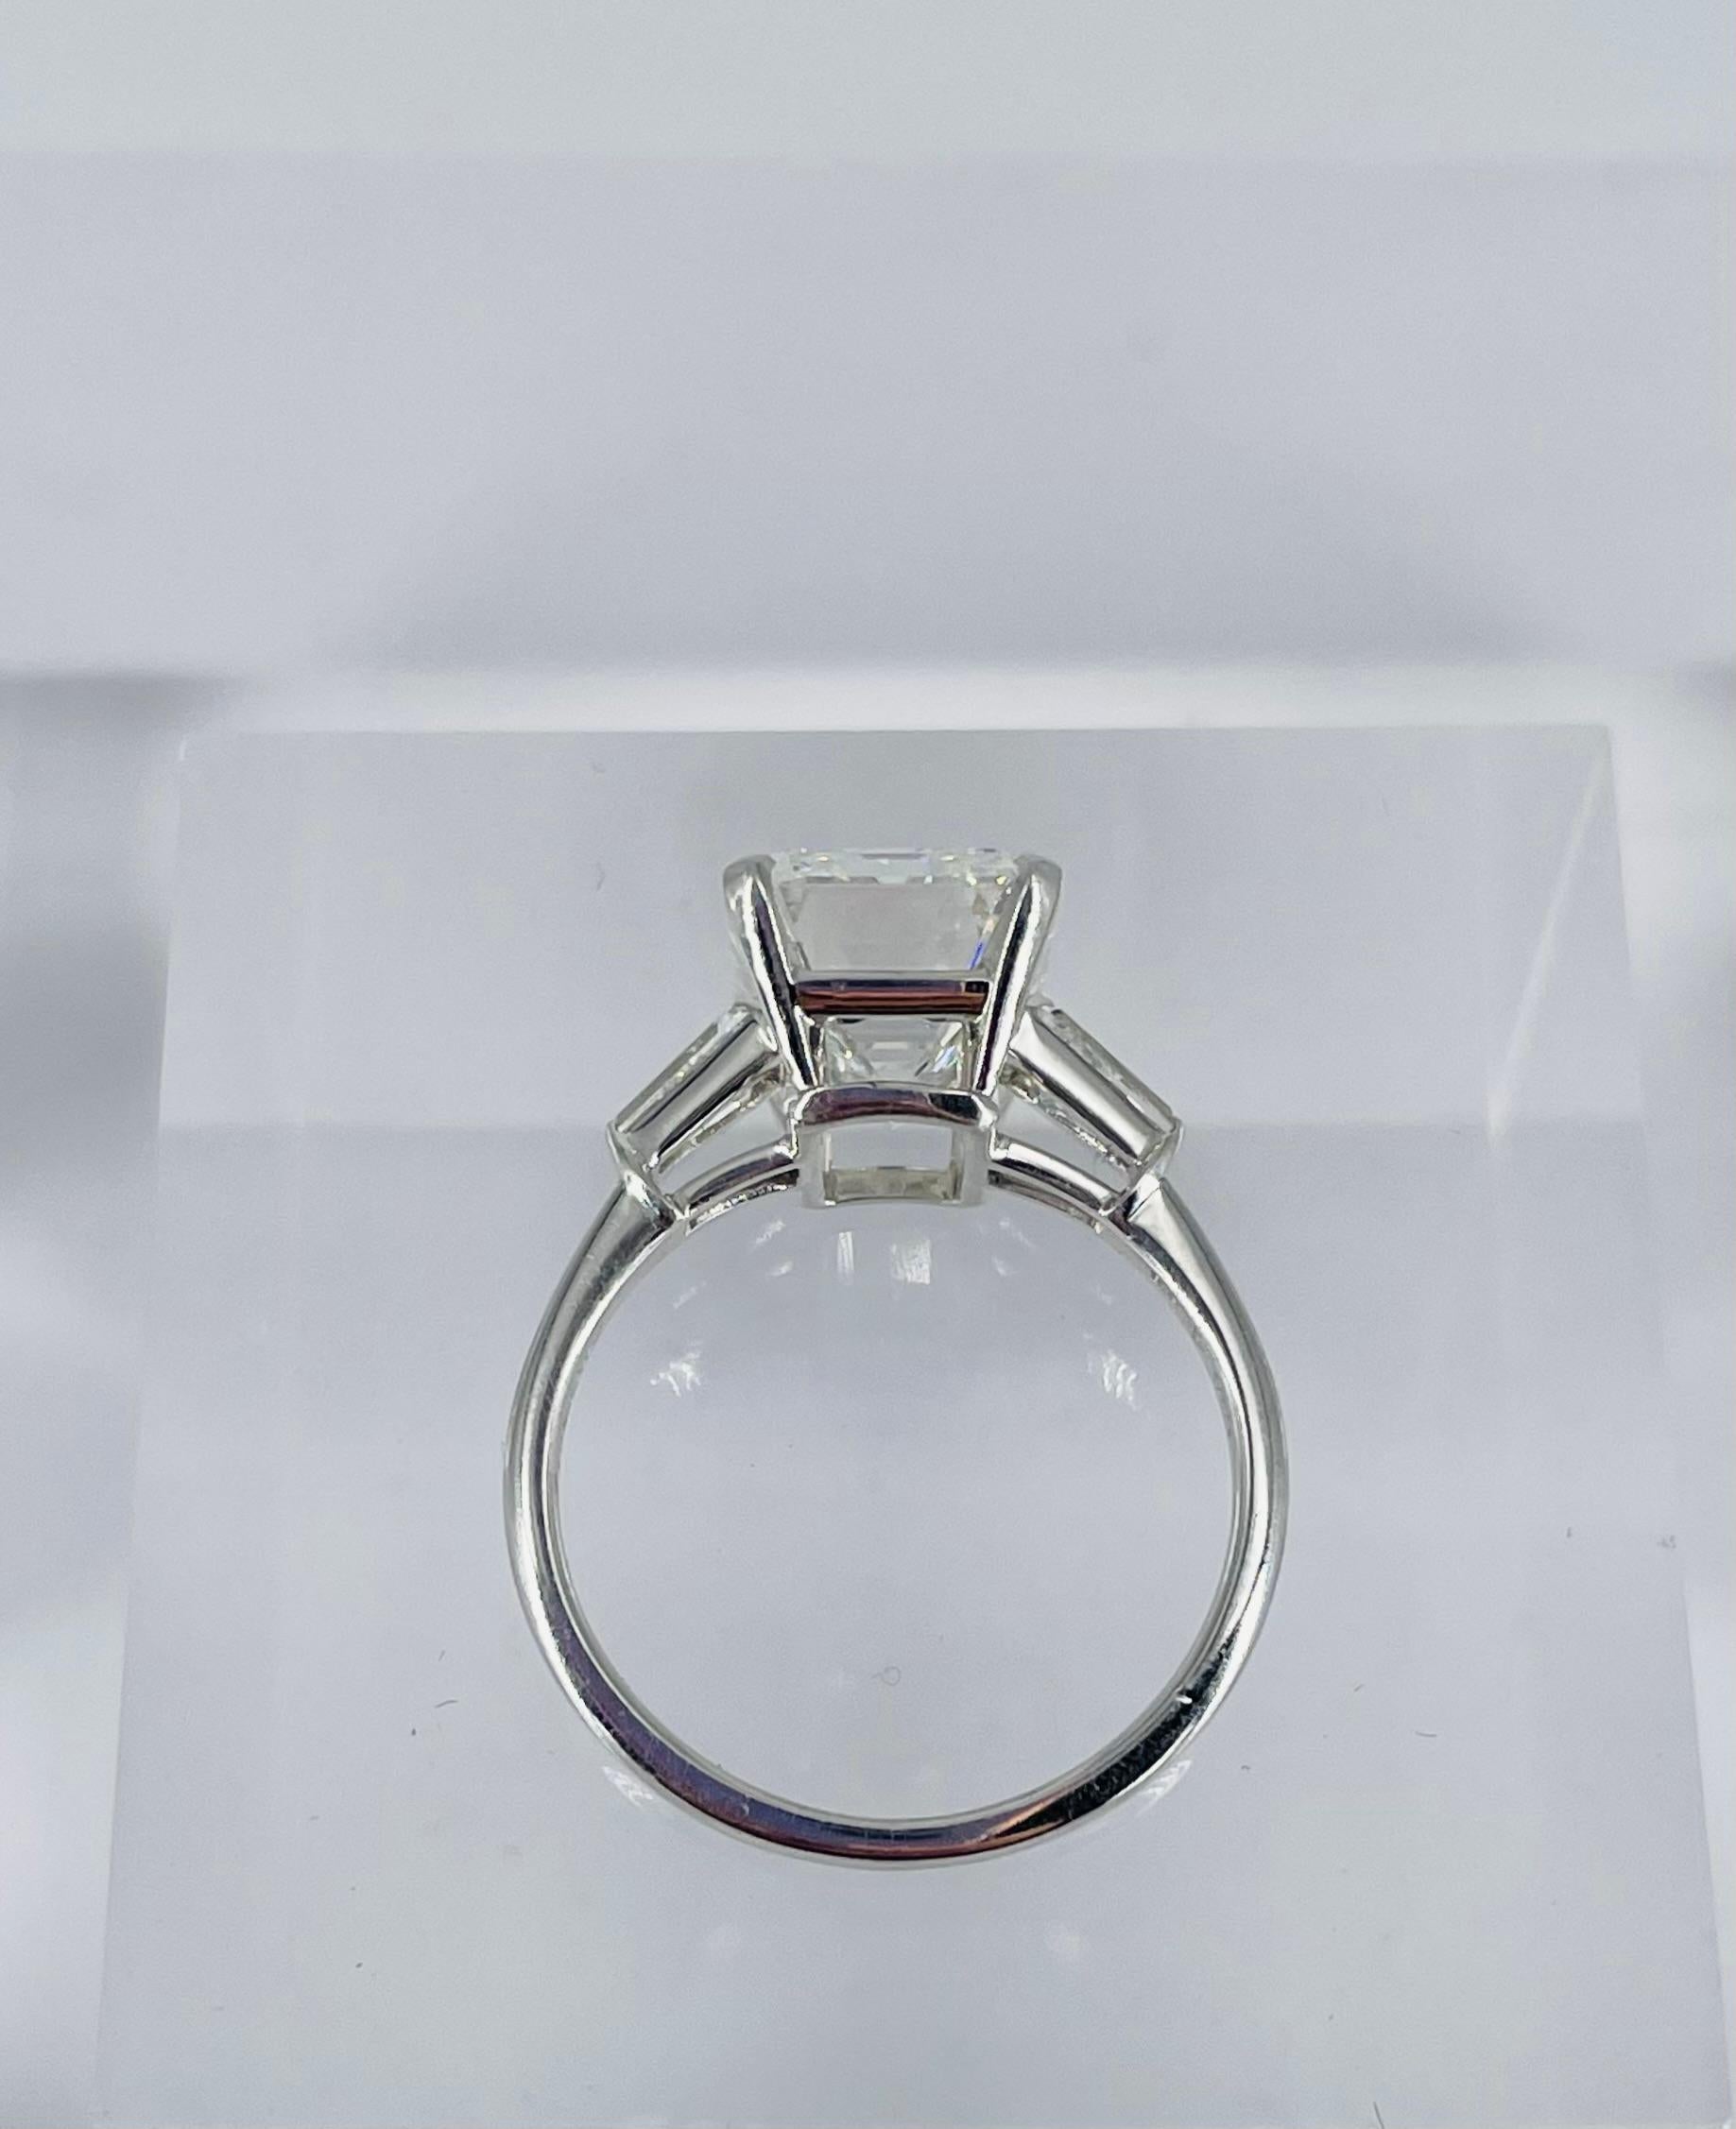 Bulgari 4.98 carat GIA HVVS2 Emerald Cut Diamond Ring with Tapered Baguettes 1